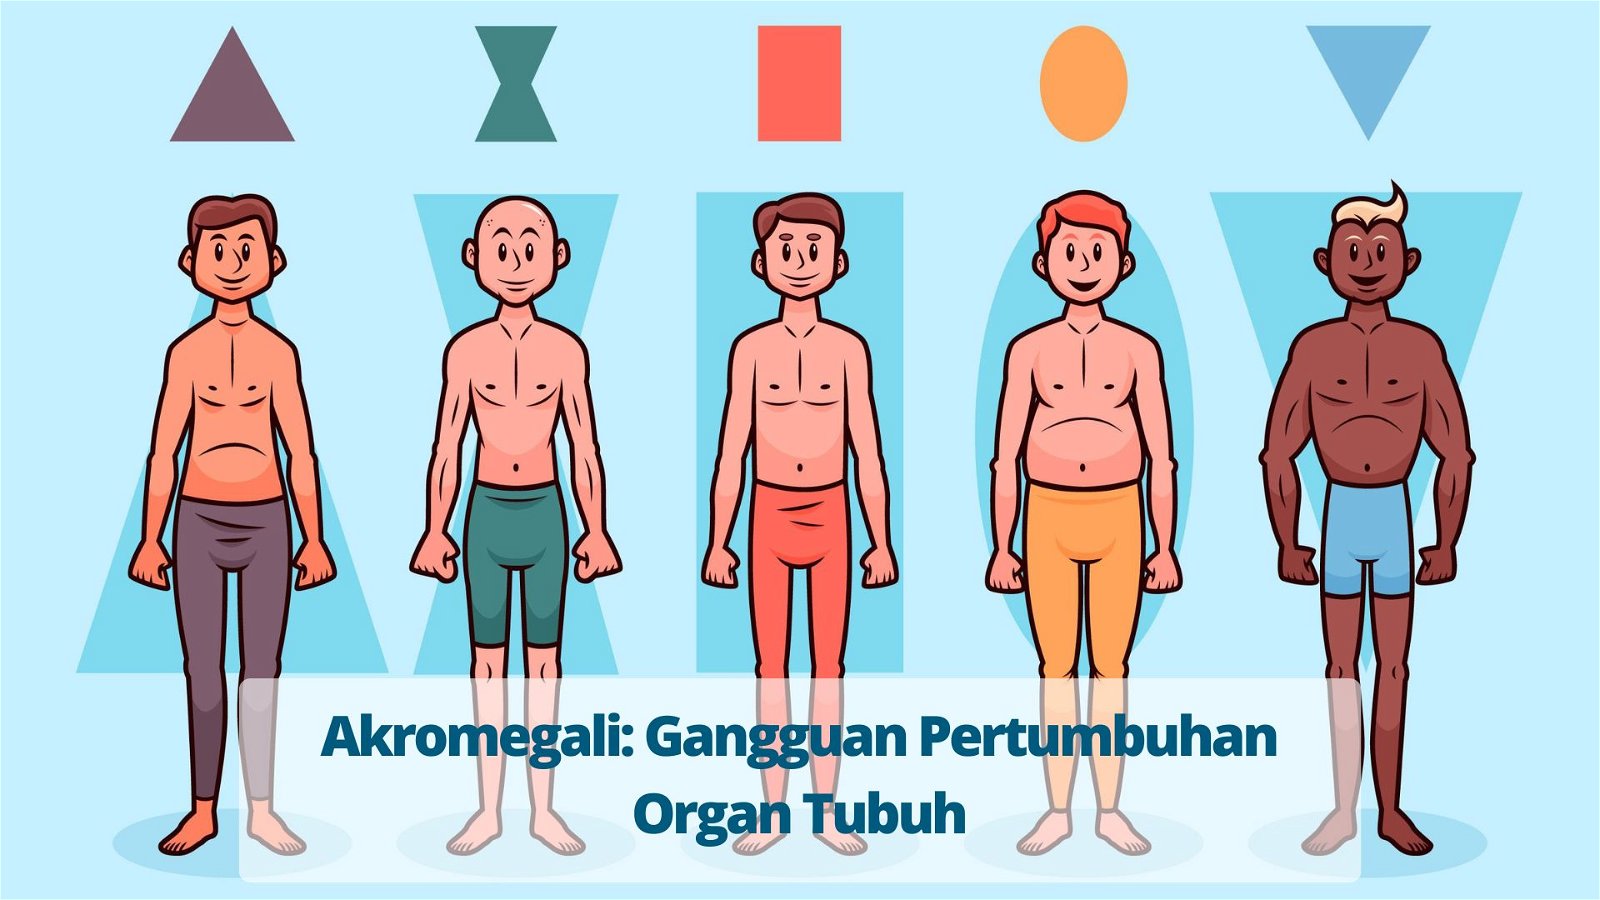 Akromegali: Gangguan Pertumbuhan Organ Tubuh